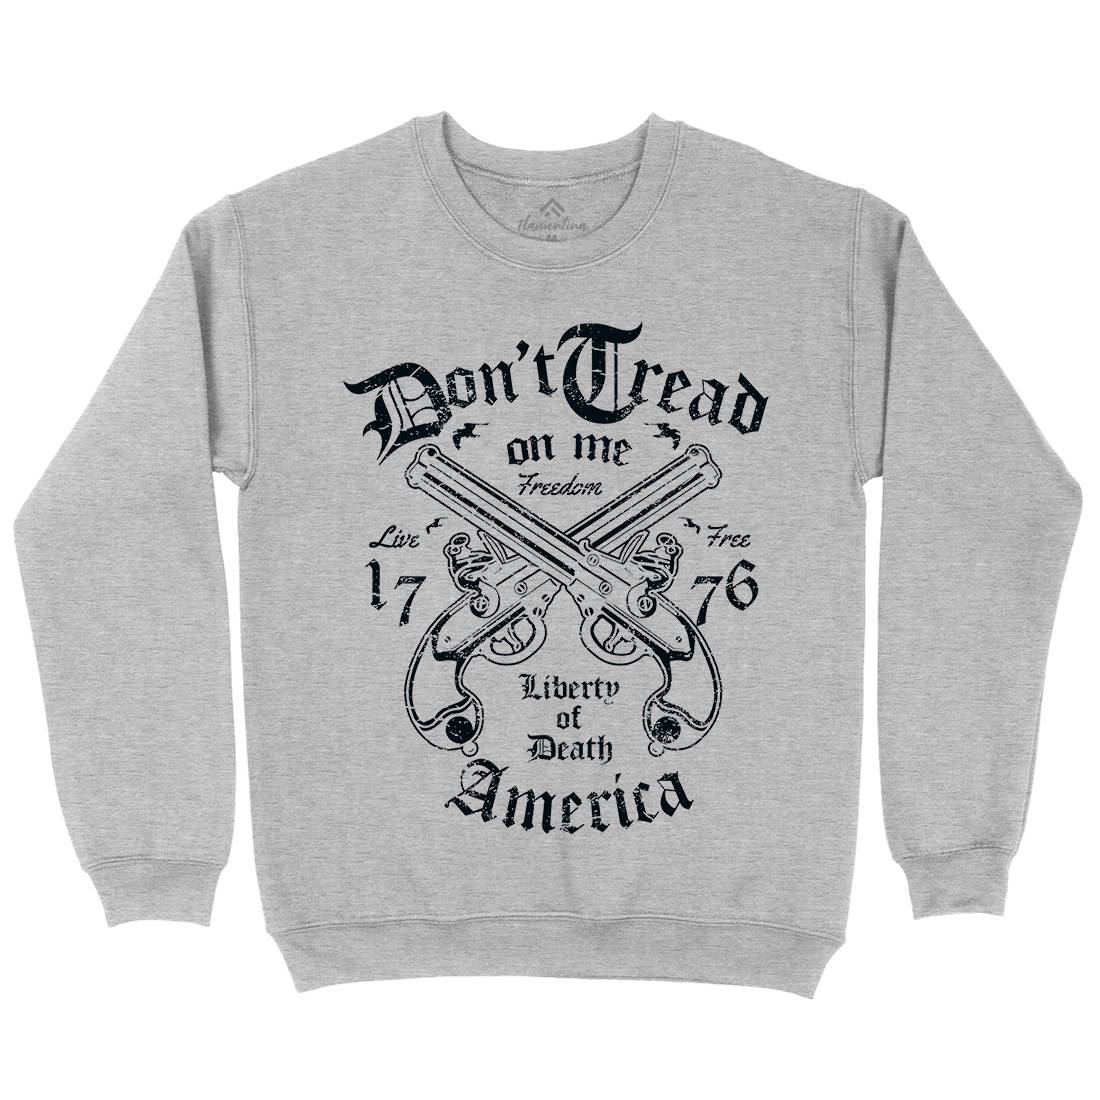 Liberty Of Death Mens Crew Neck Sweatshirt American A084